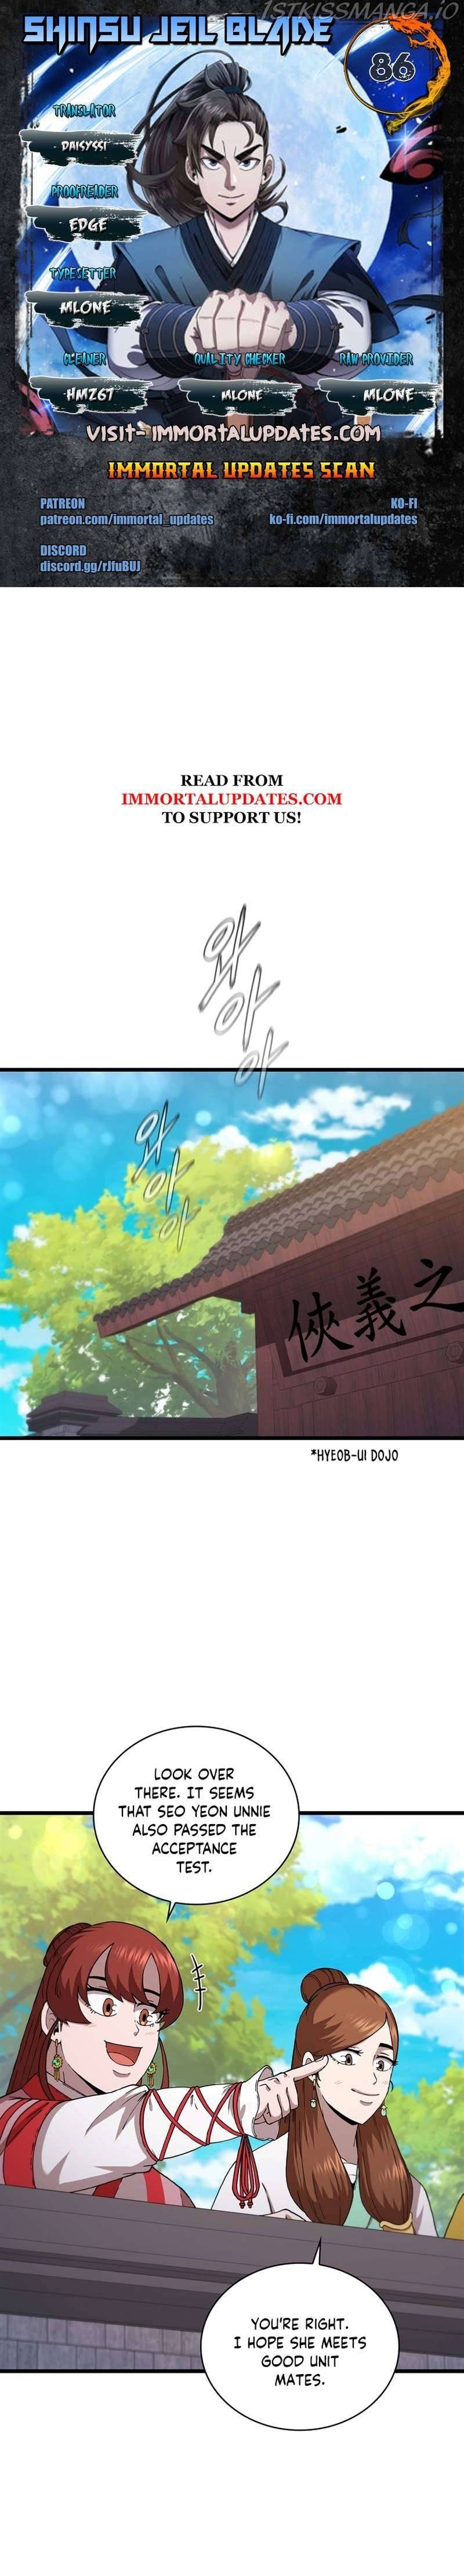 Shinsu Jeil Sword Chapter 86 - Page 0